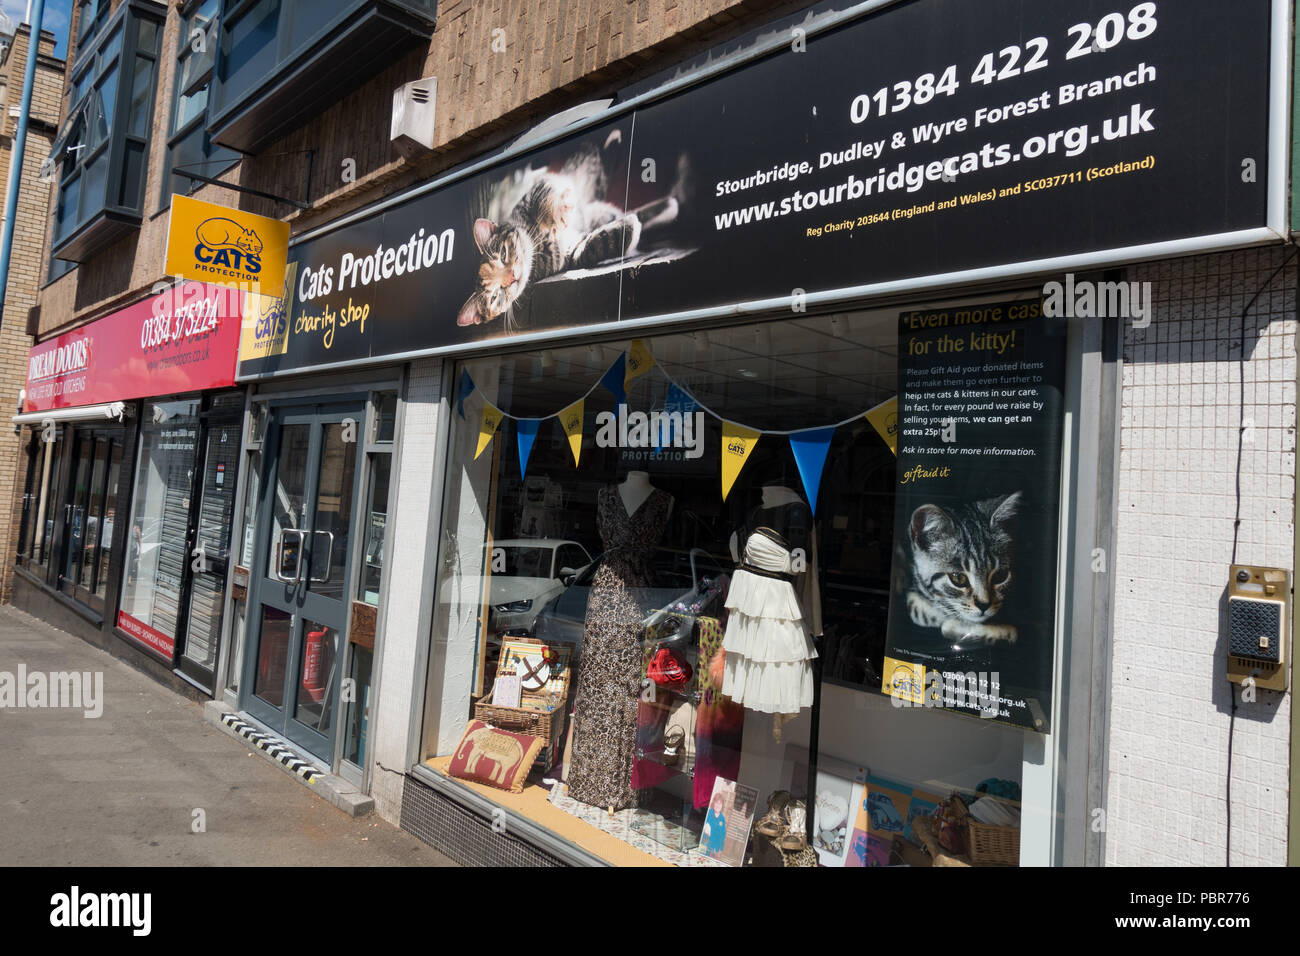 Shop fronts, Cats Protection League, in Stourbridge town centre. West Midlands. UK Stock Photo